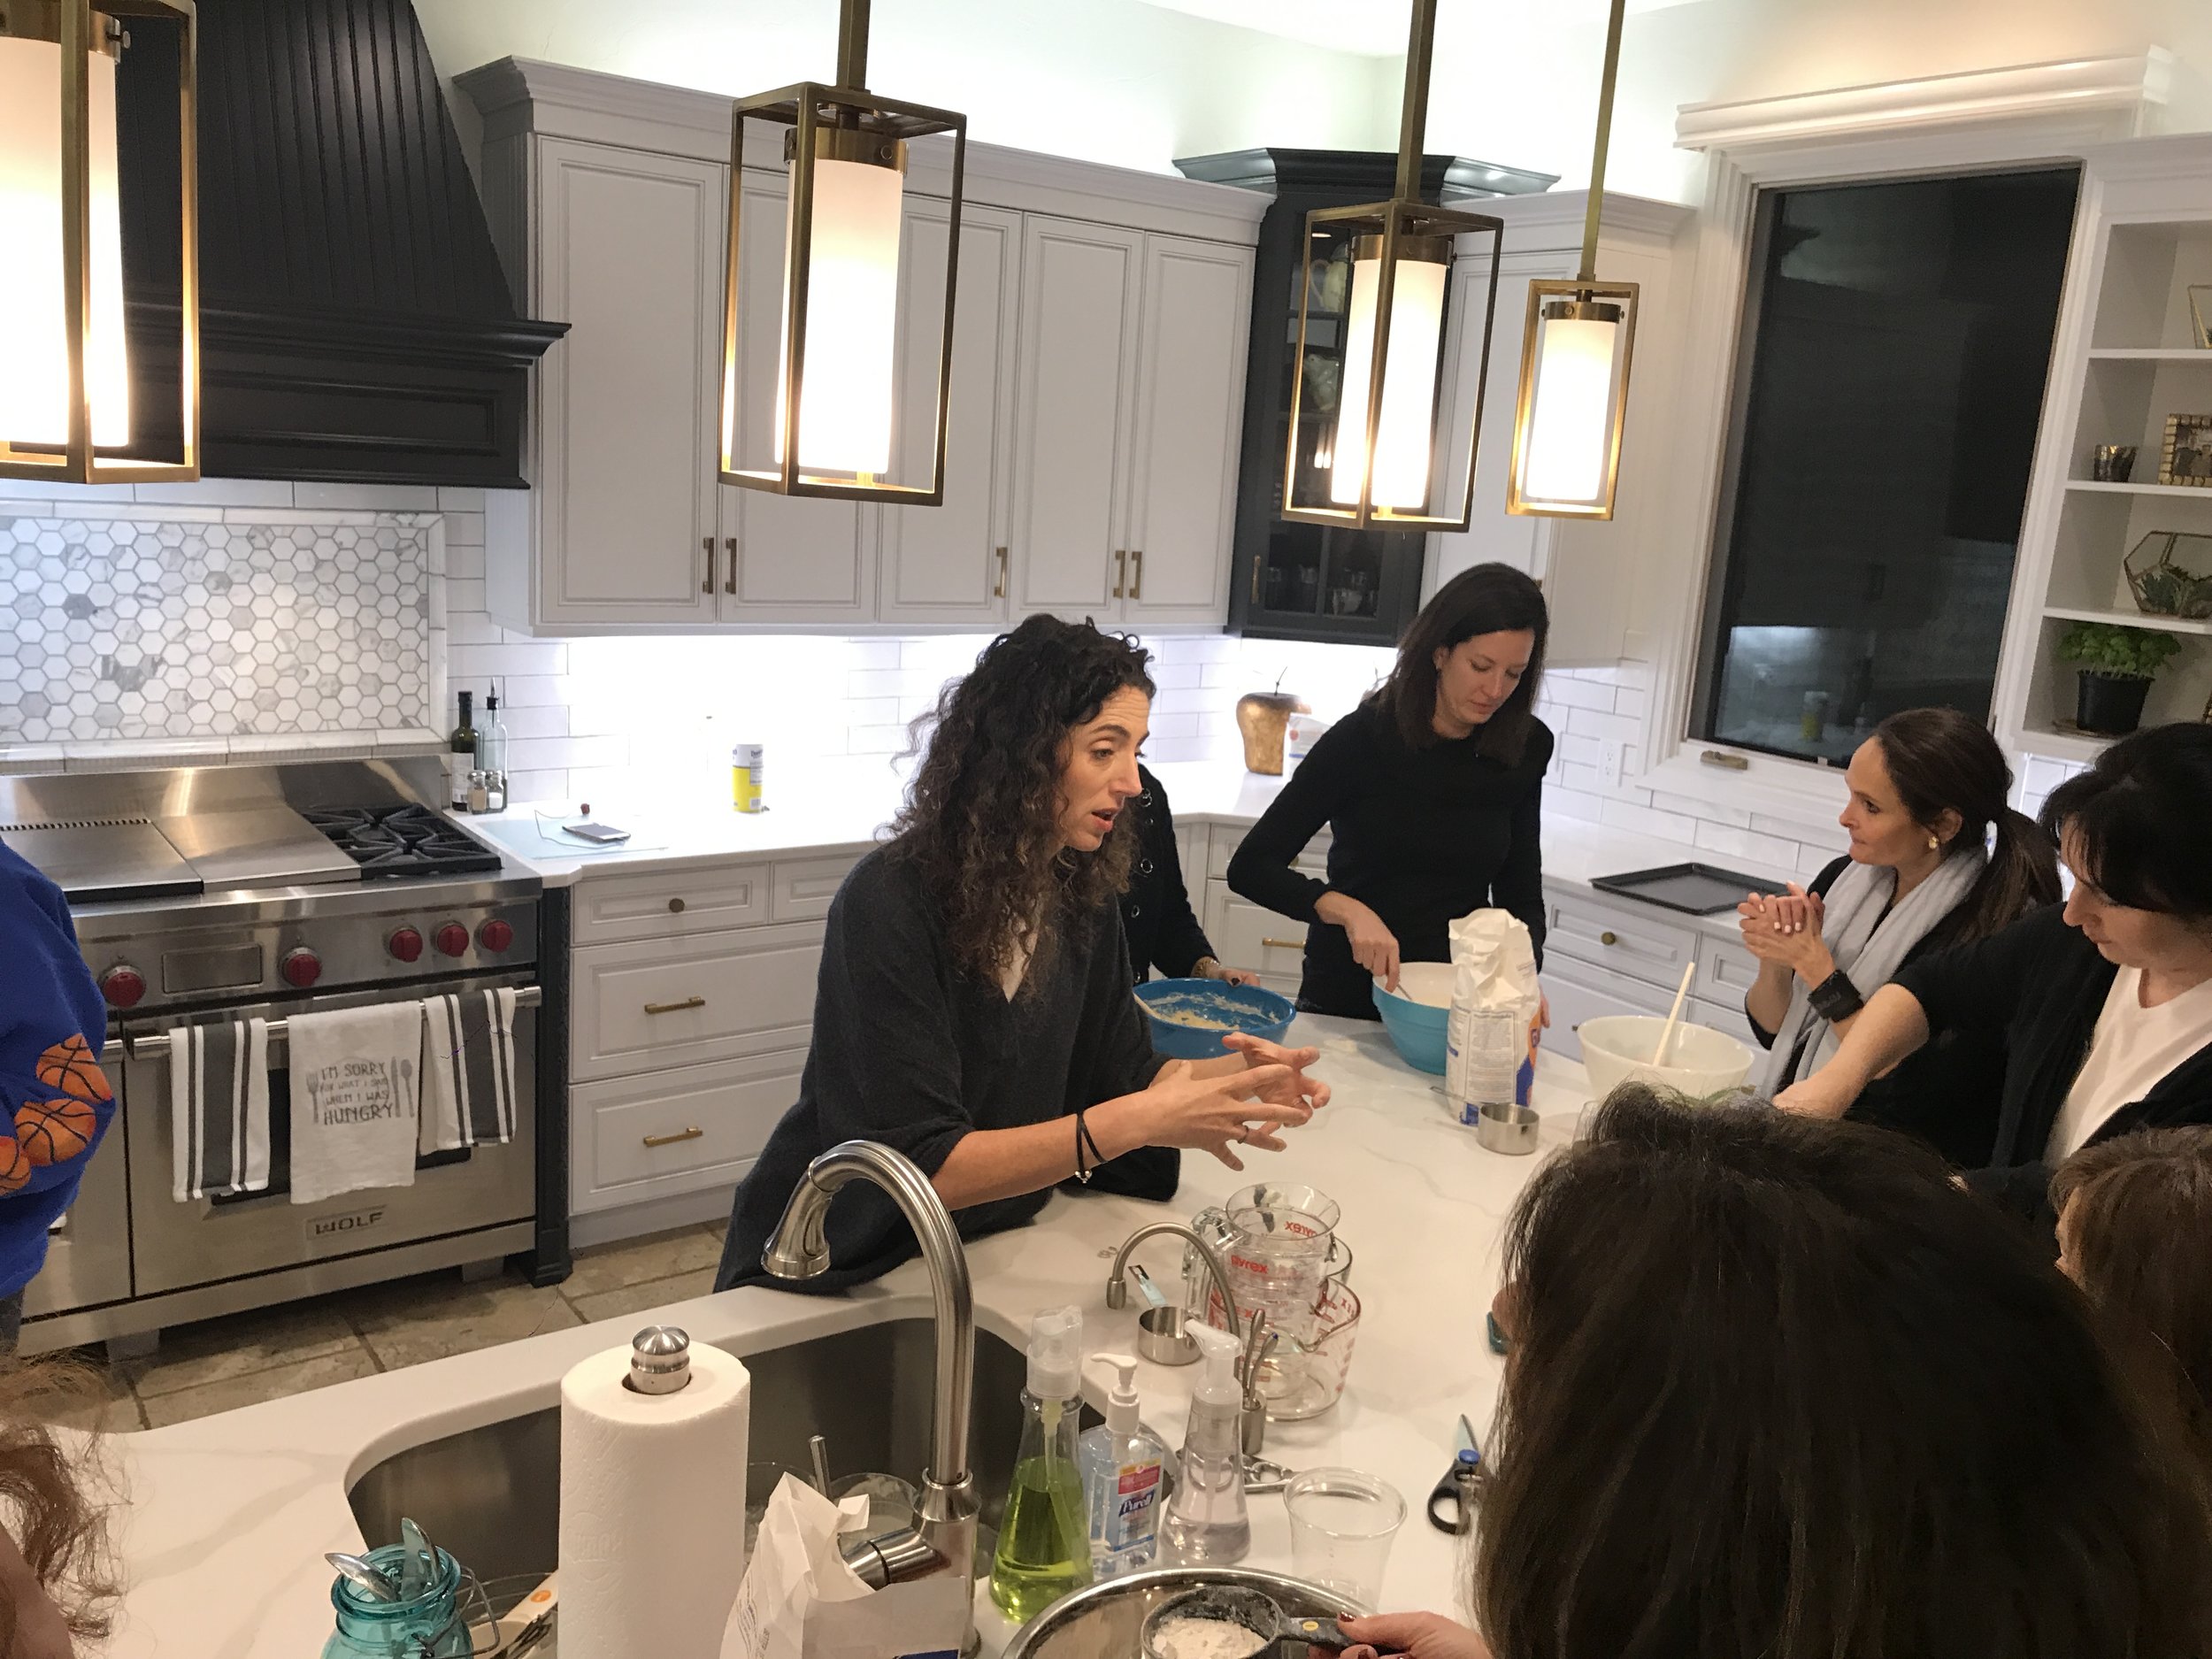 Beth Ricanati MD teaching a workshop in the kitchen